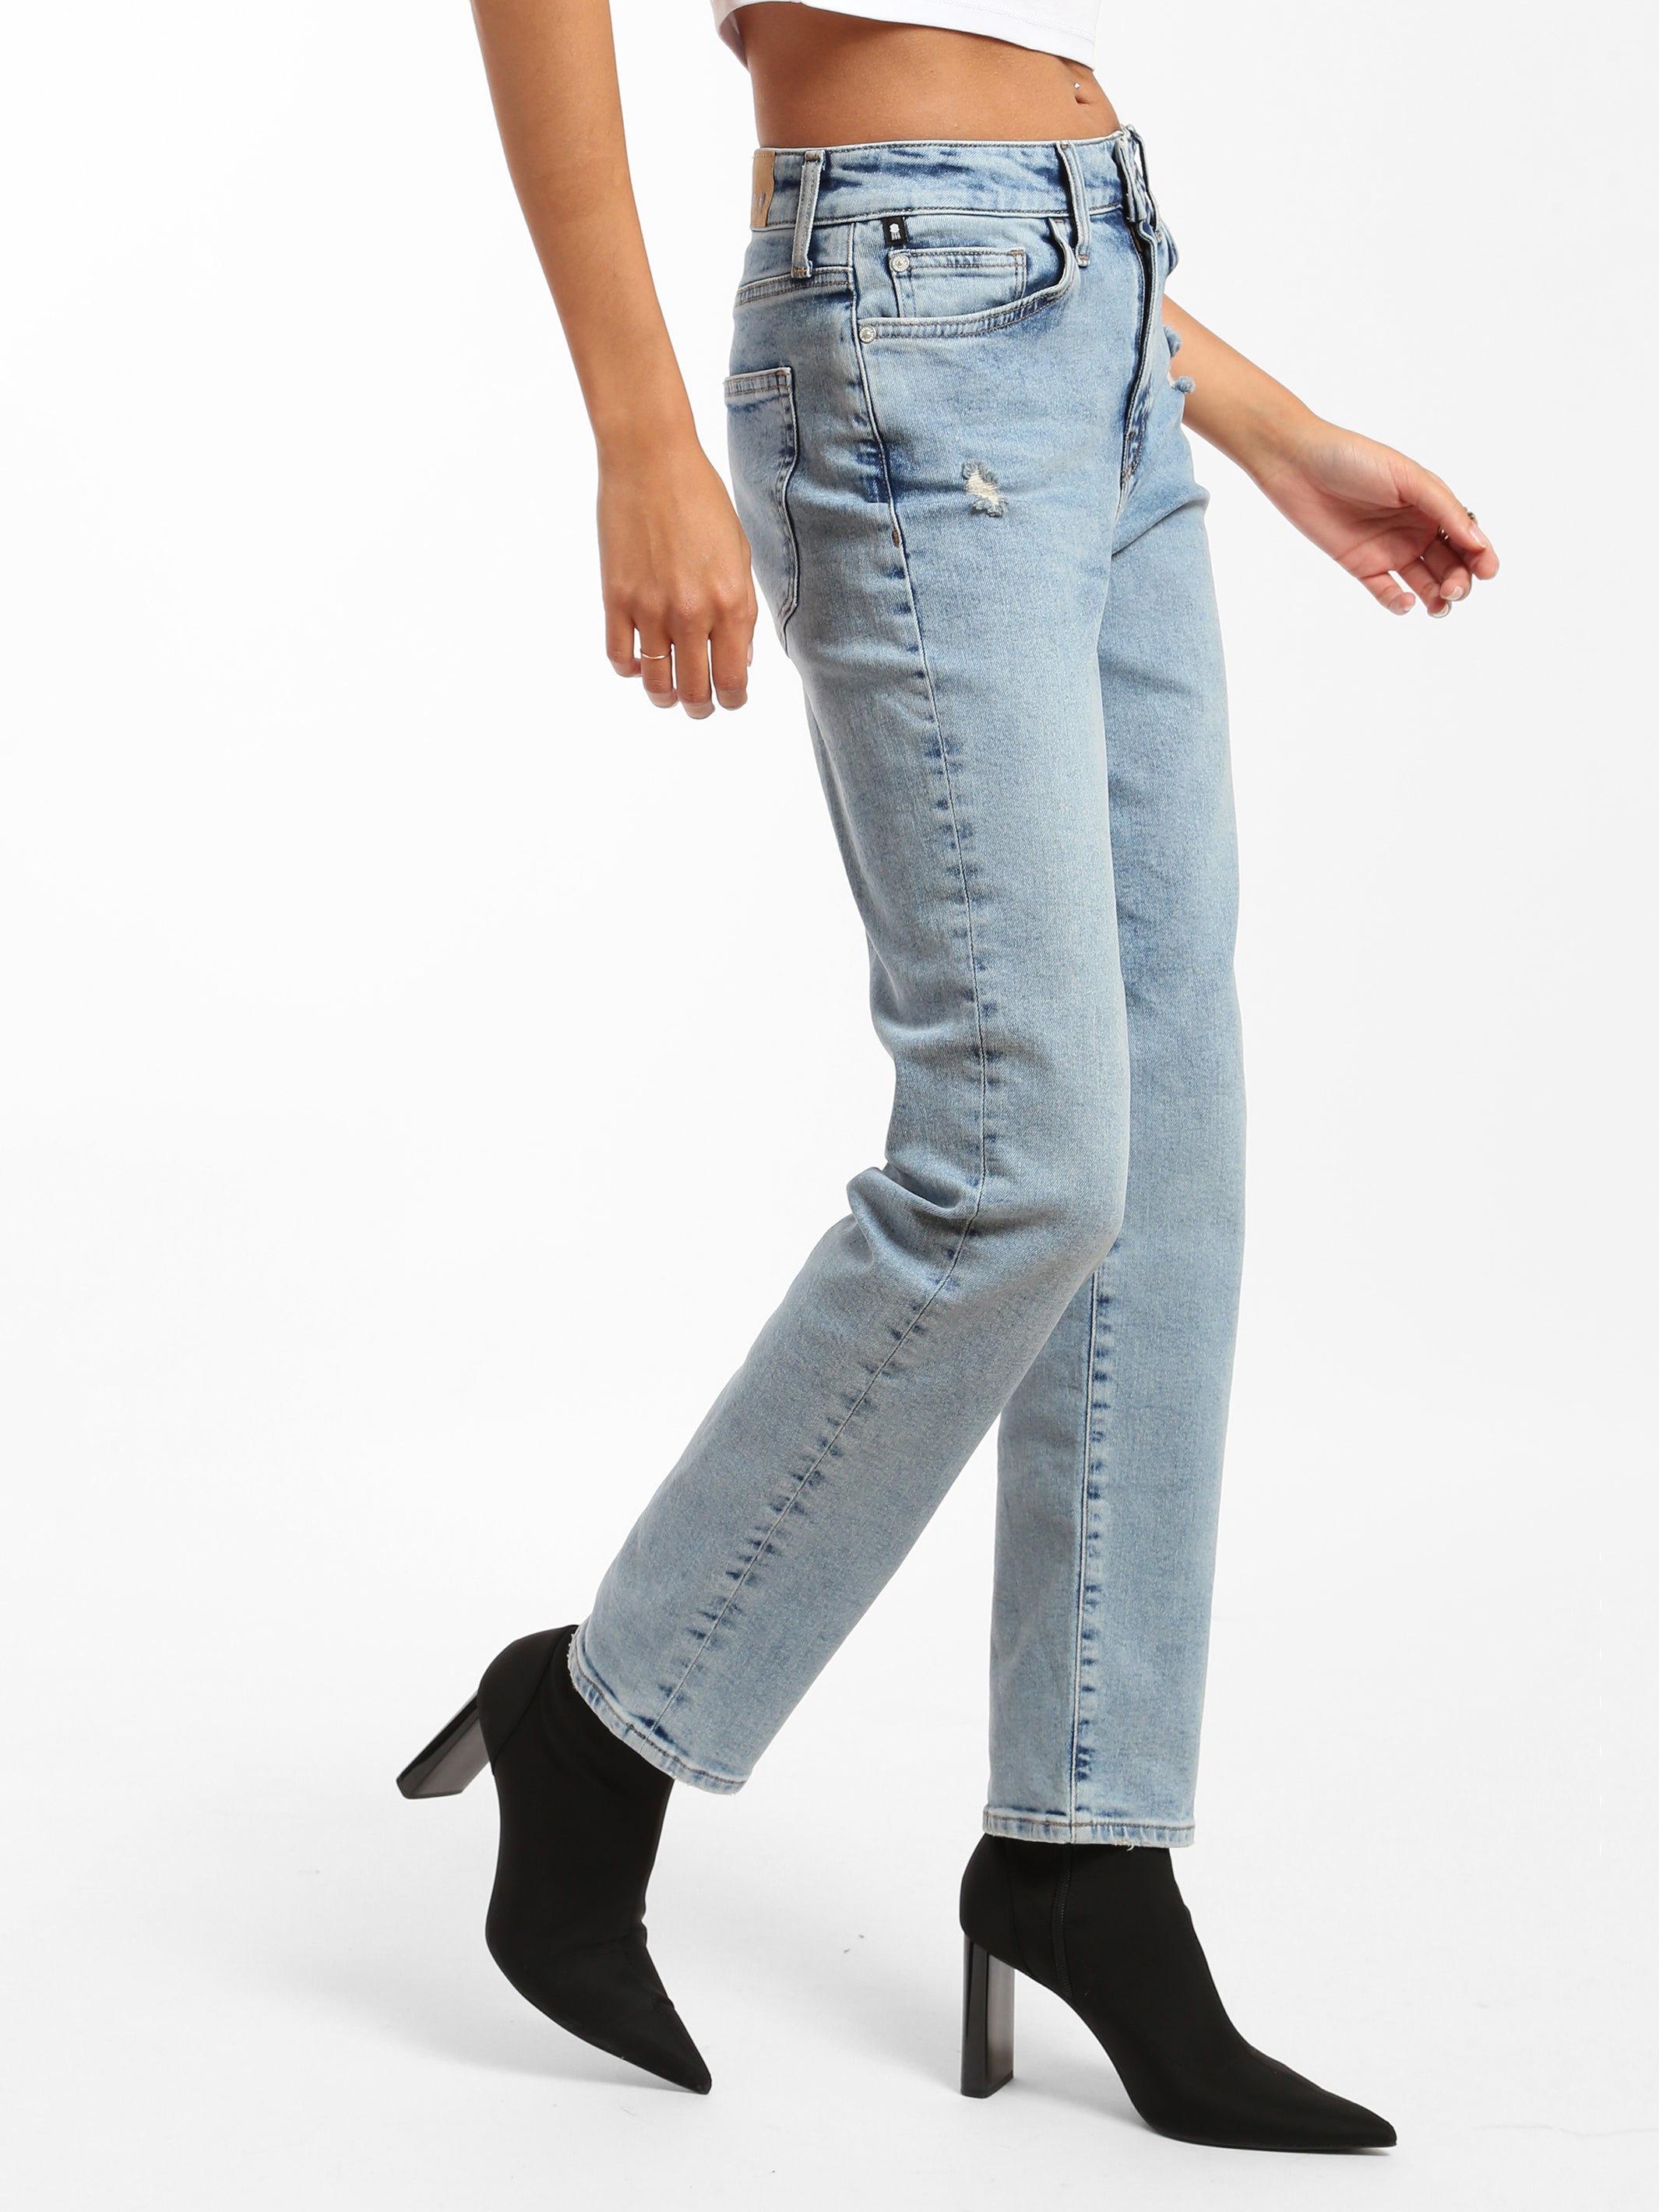 Liberty Girlfriend Jeans in Light Destroyed Denim - BROOKLYN INDUSTRIES